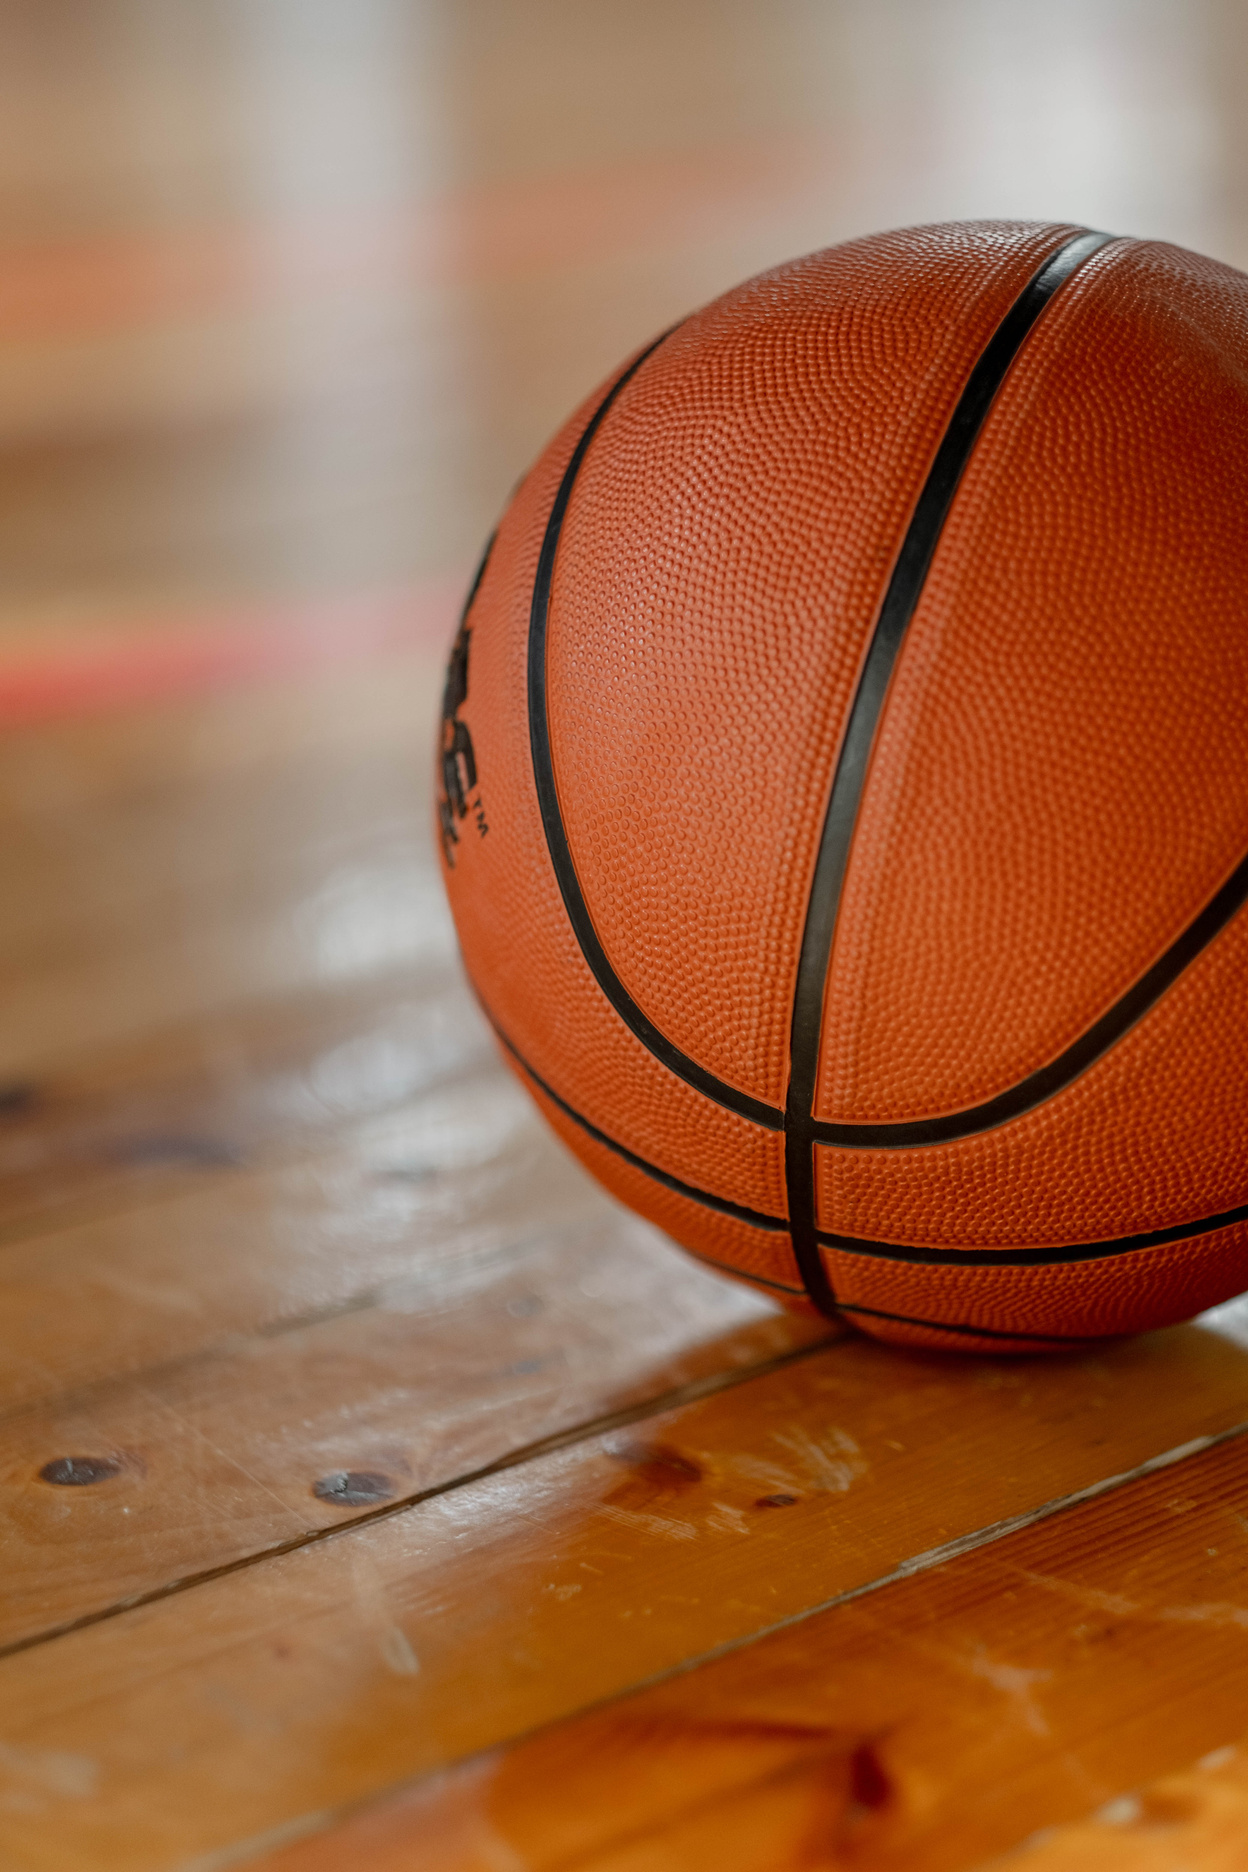 Close Up Photo of a Basketball